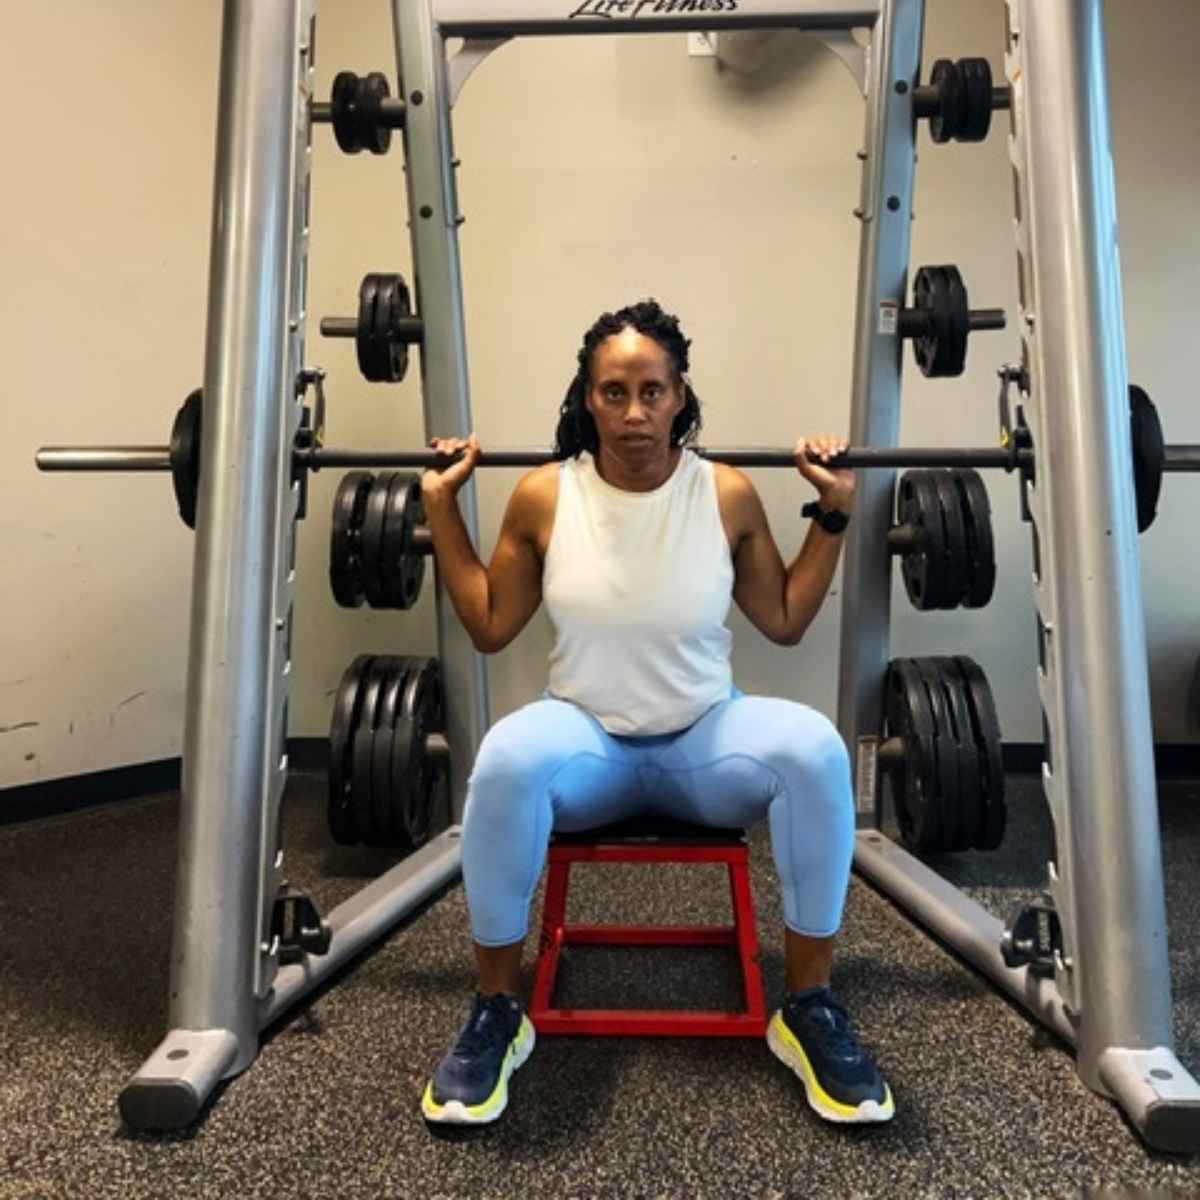 Box squats benefits: More than your average squat